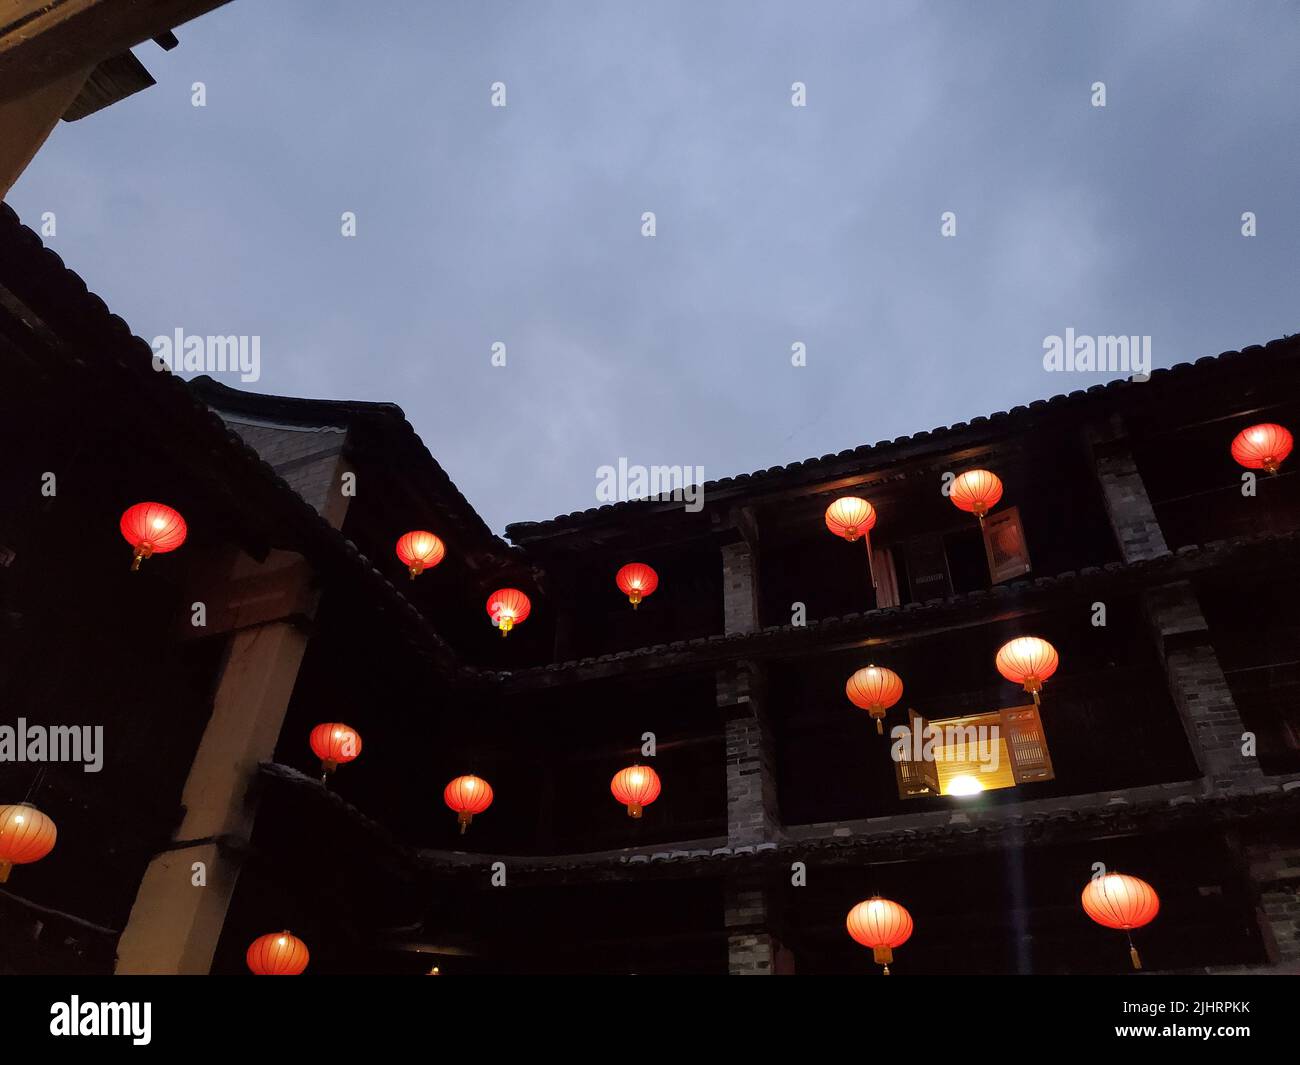 The traditional Chinese style lanterns inside Fujian tulou rectangular building in Fujian, China Stock Photo